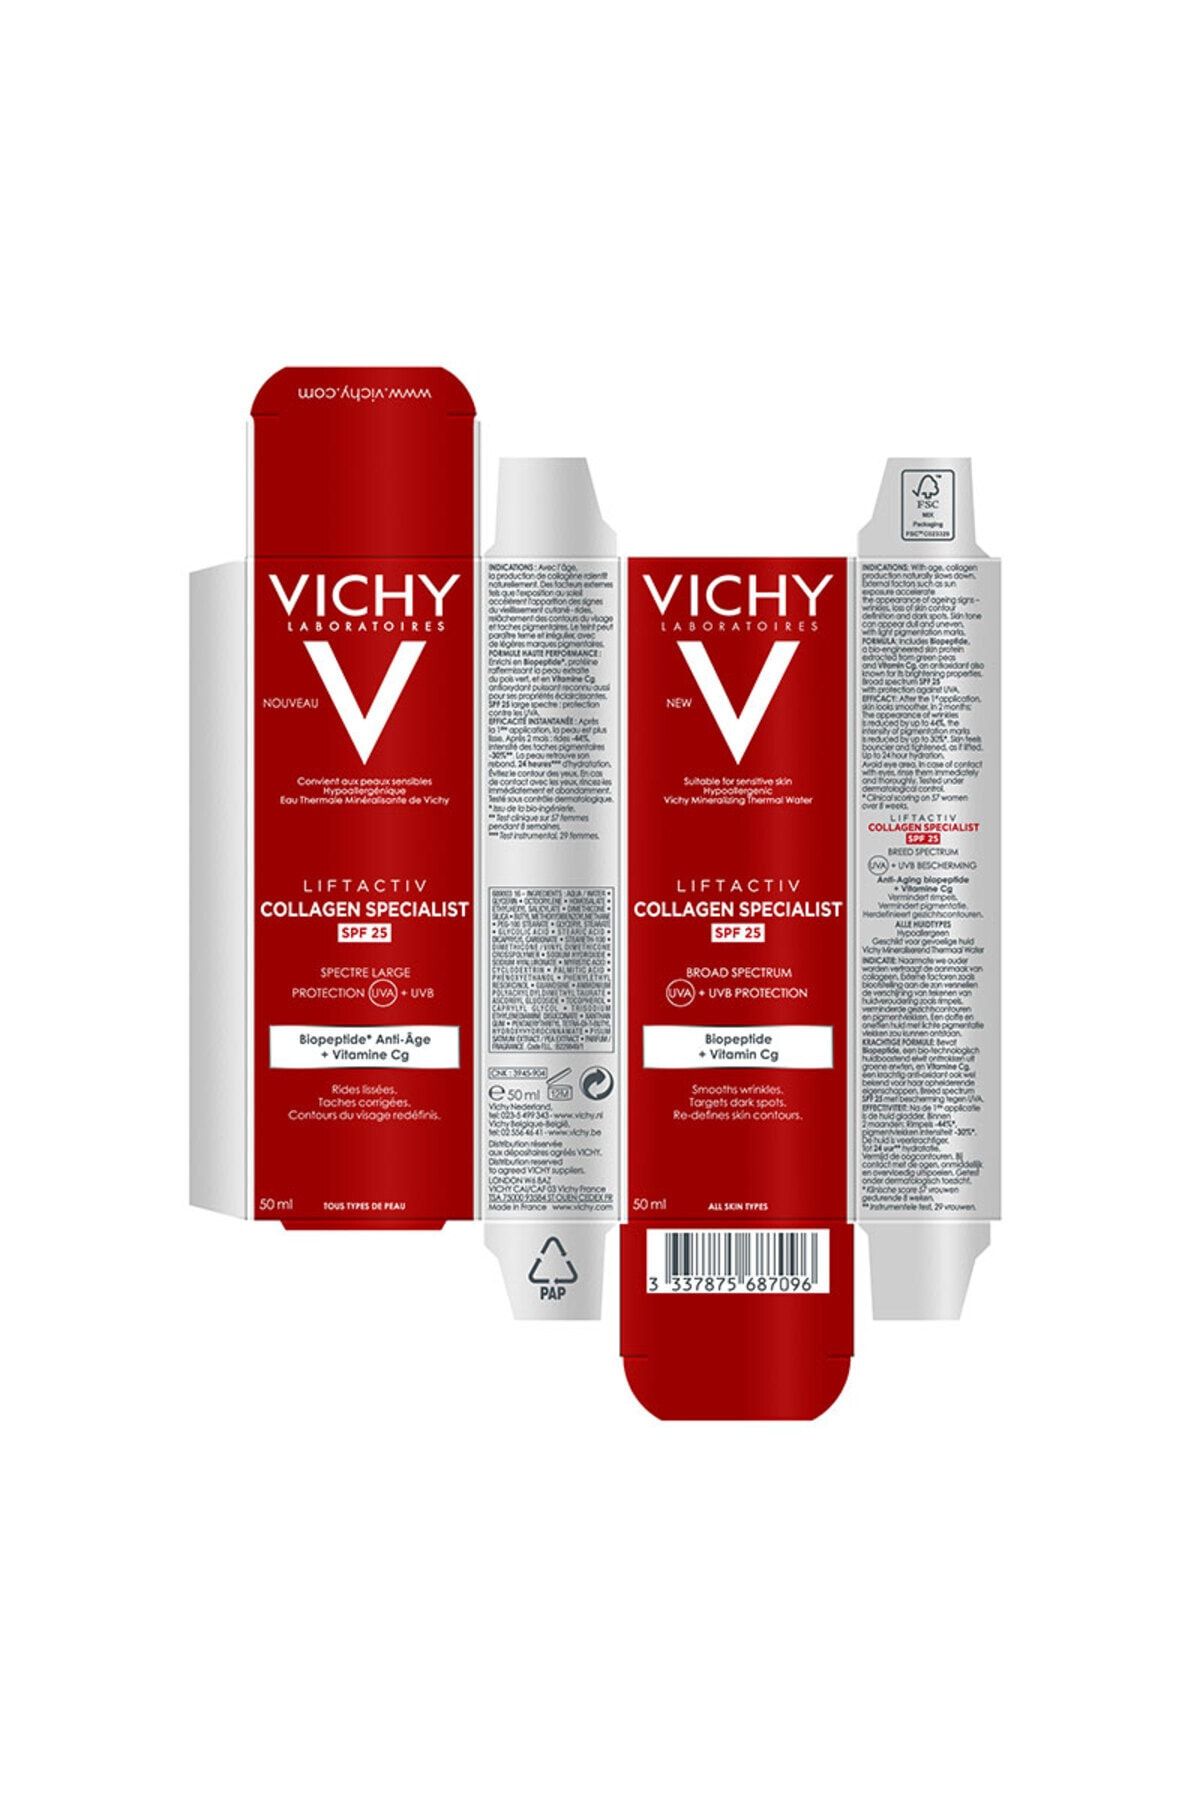 Vichy کرم مراقبتی کاهش دهنده لک و چروک با SPF 25 روشن کننده پوست 50 میل